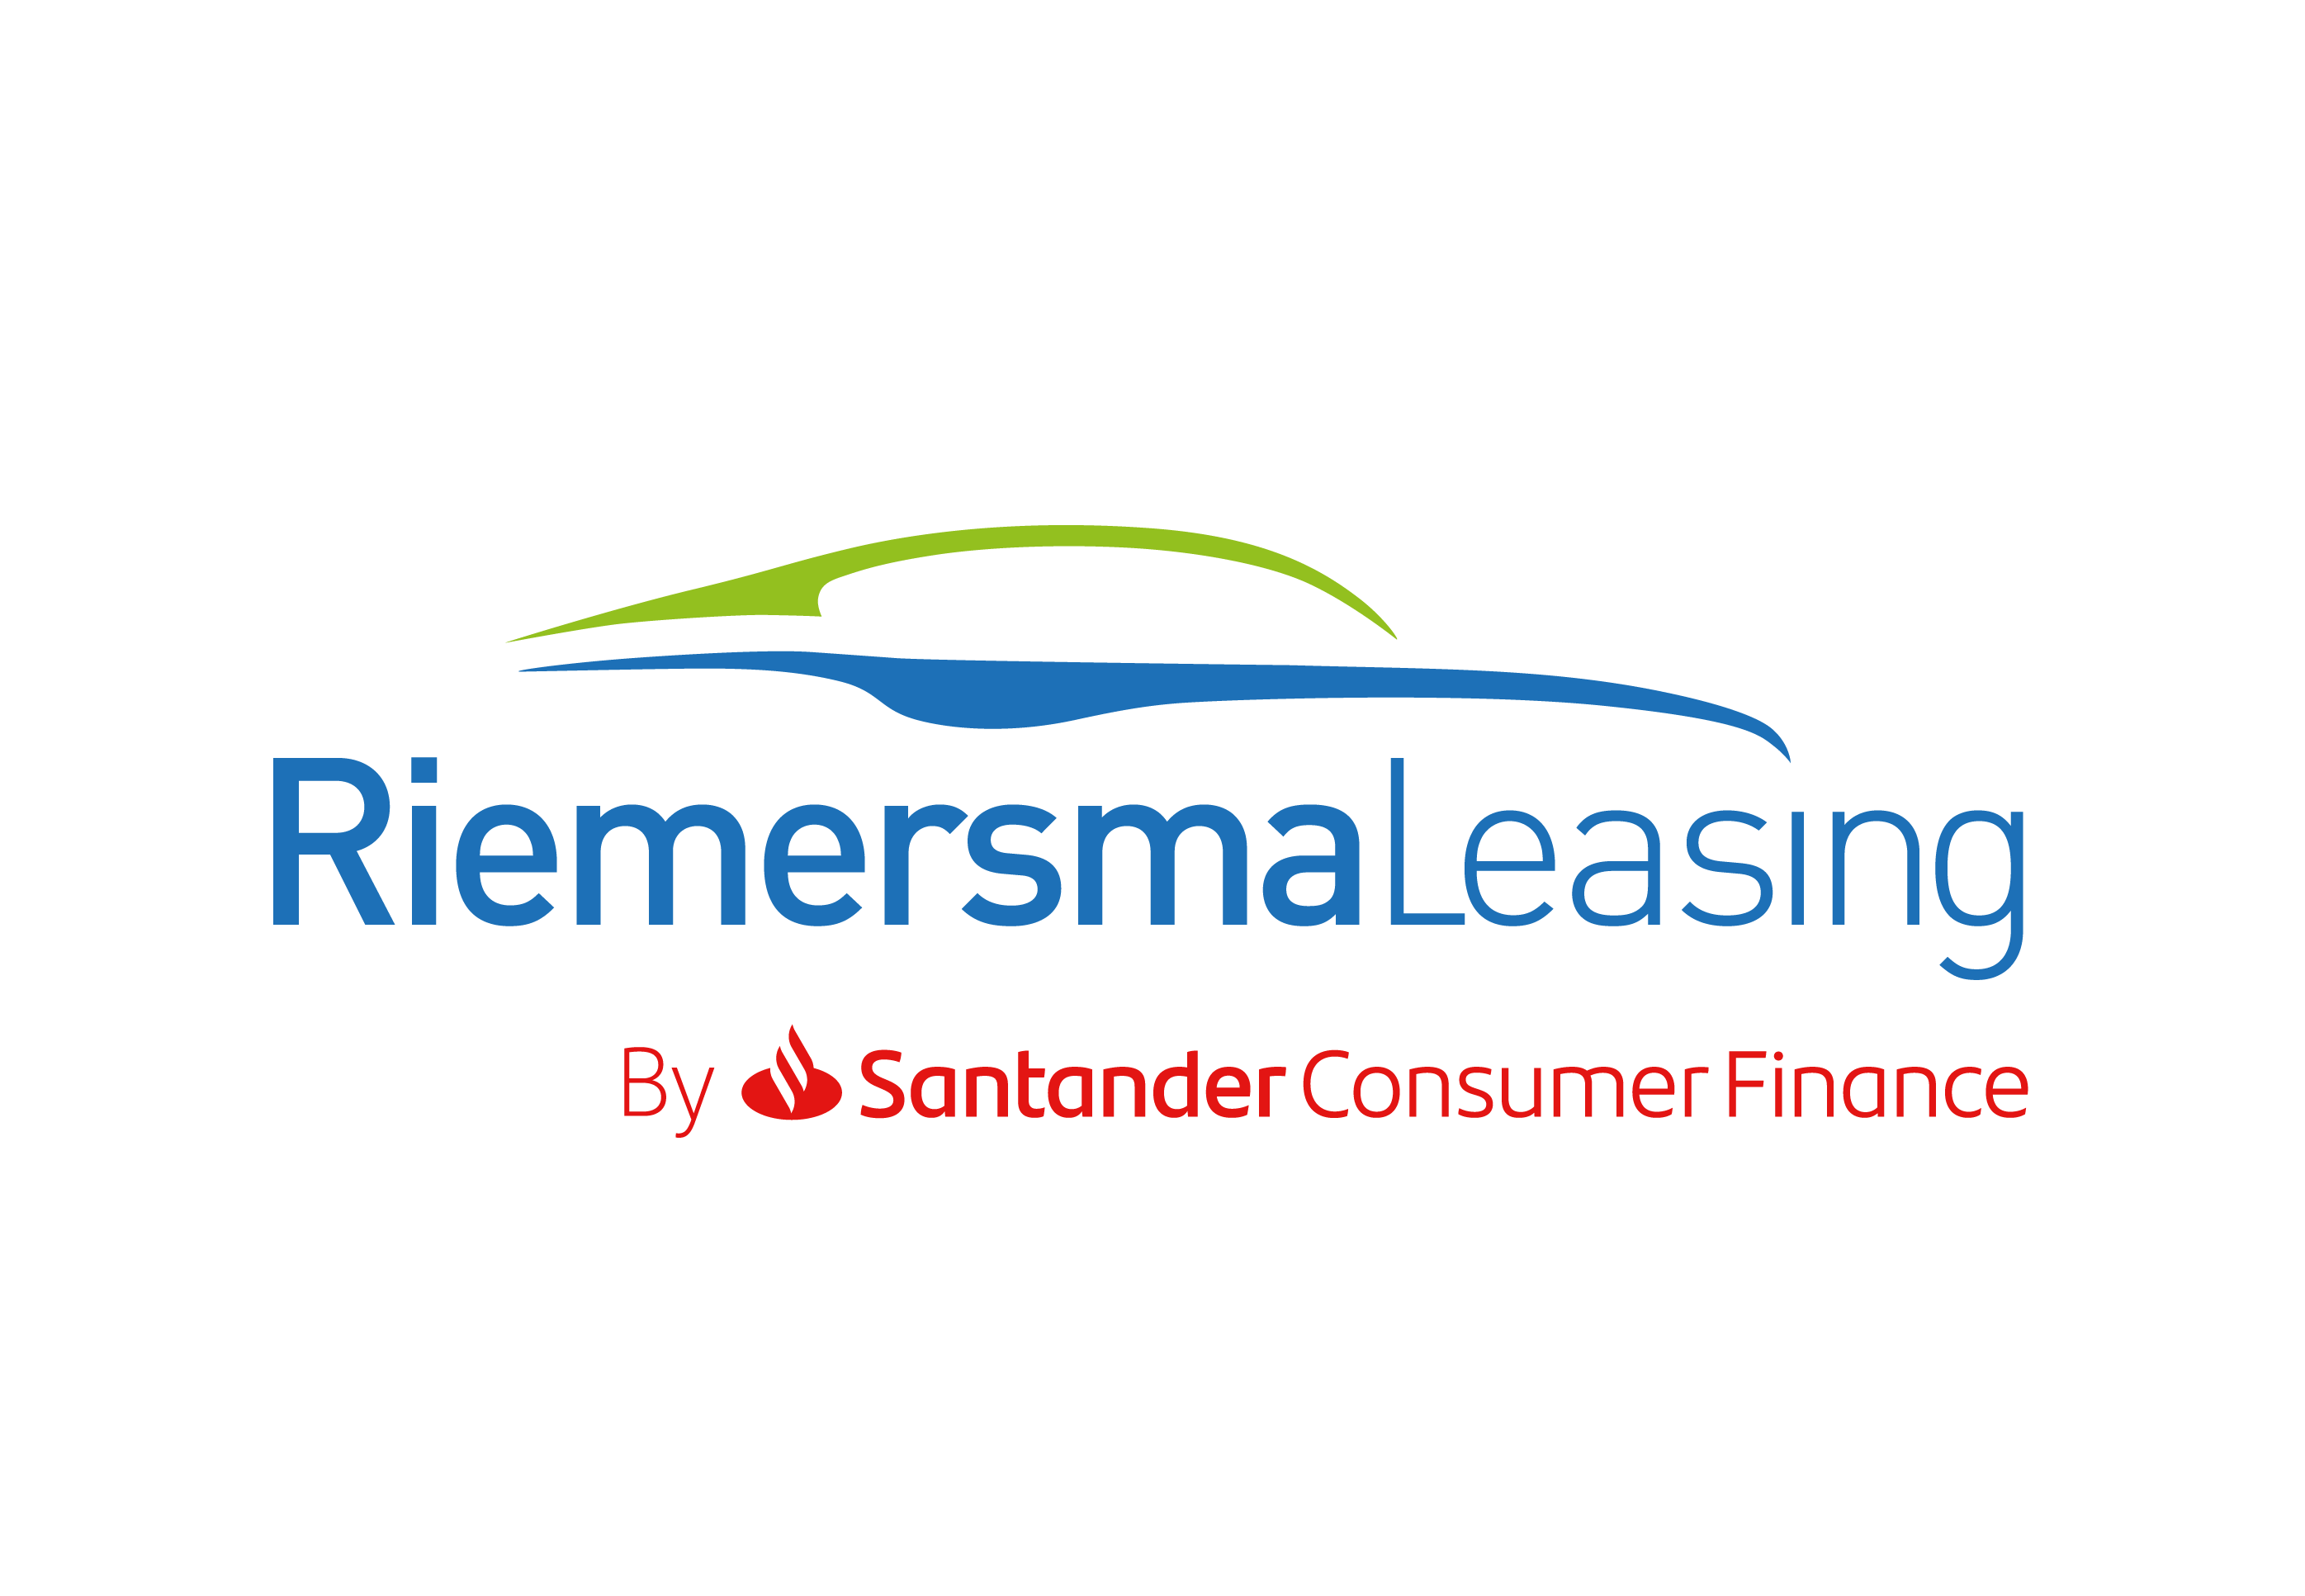 RiemersmaLeasing by Santander Consumer Finance_Positivo